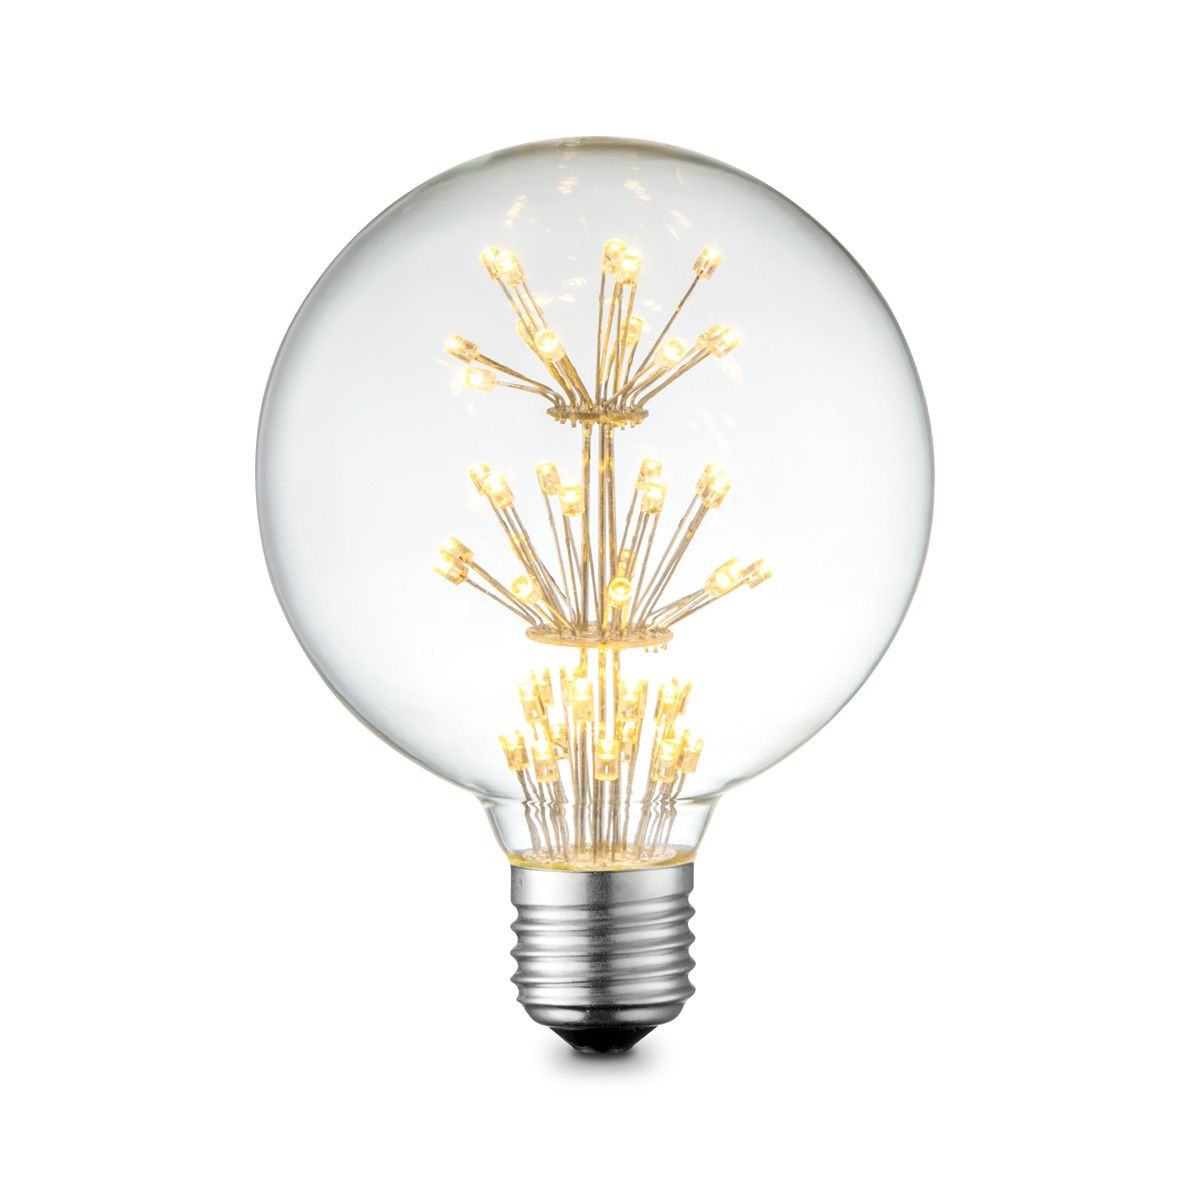 Edison Vintage LED lamp E27 LED filament lichtbron, Crystal Globe G95, 9.5/9.5/13.5cm, Helder, Retro LED lamp 1W 100lm 2300K, warm wit licht, geschikt voor E27 fitting